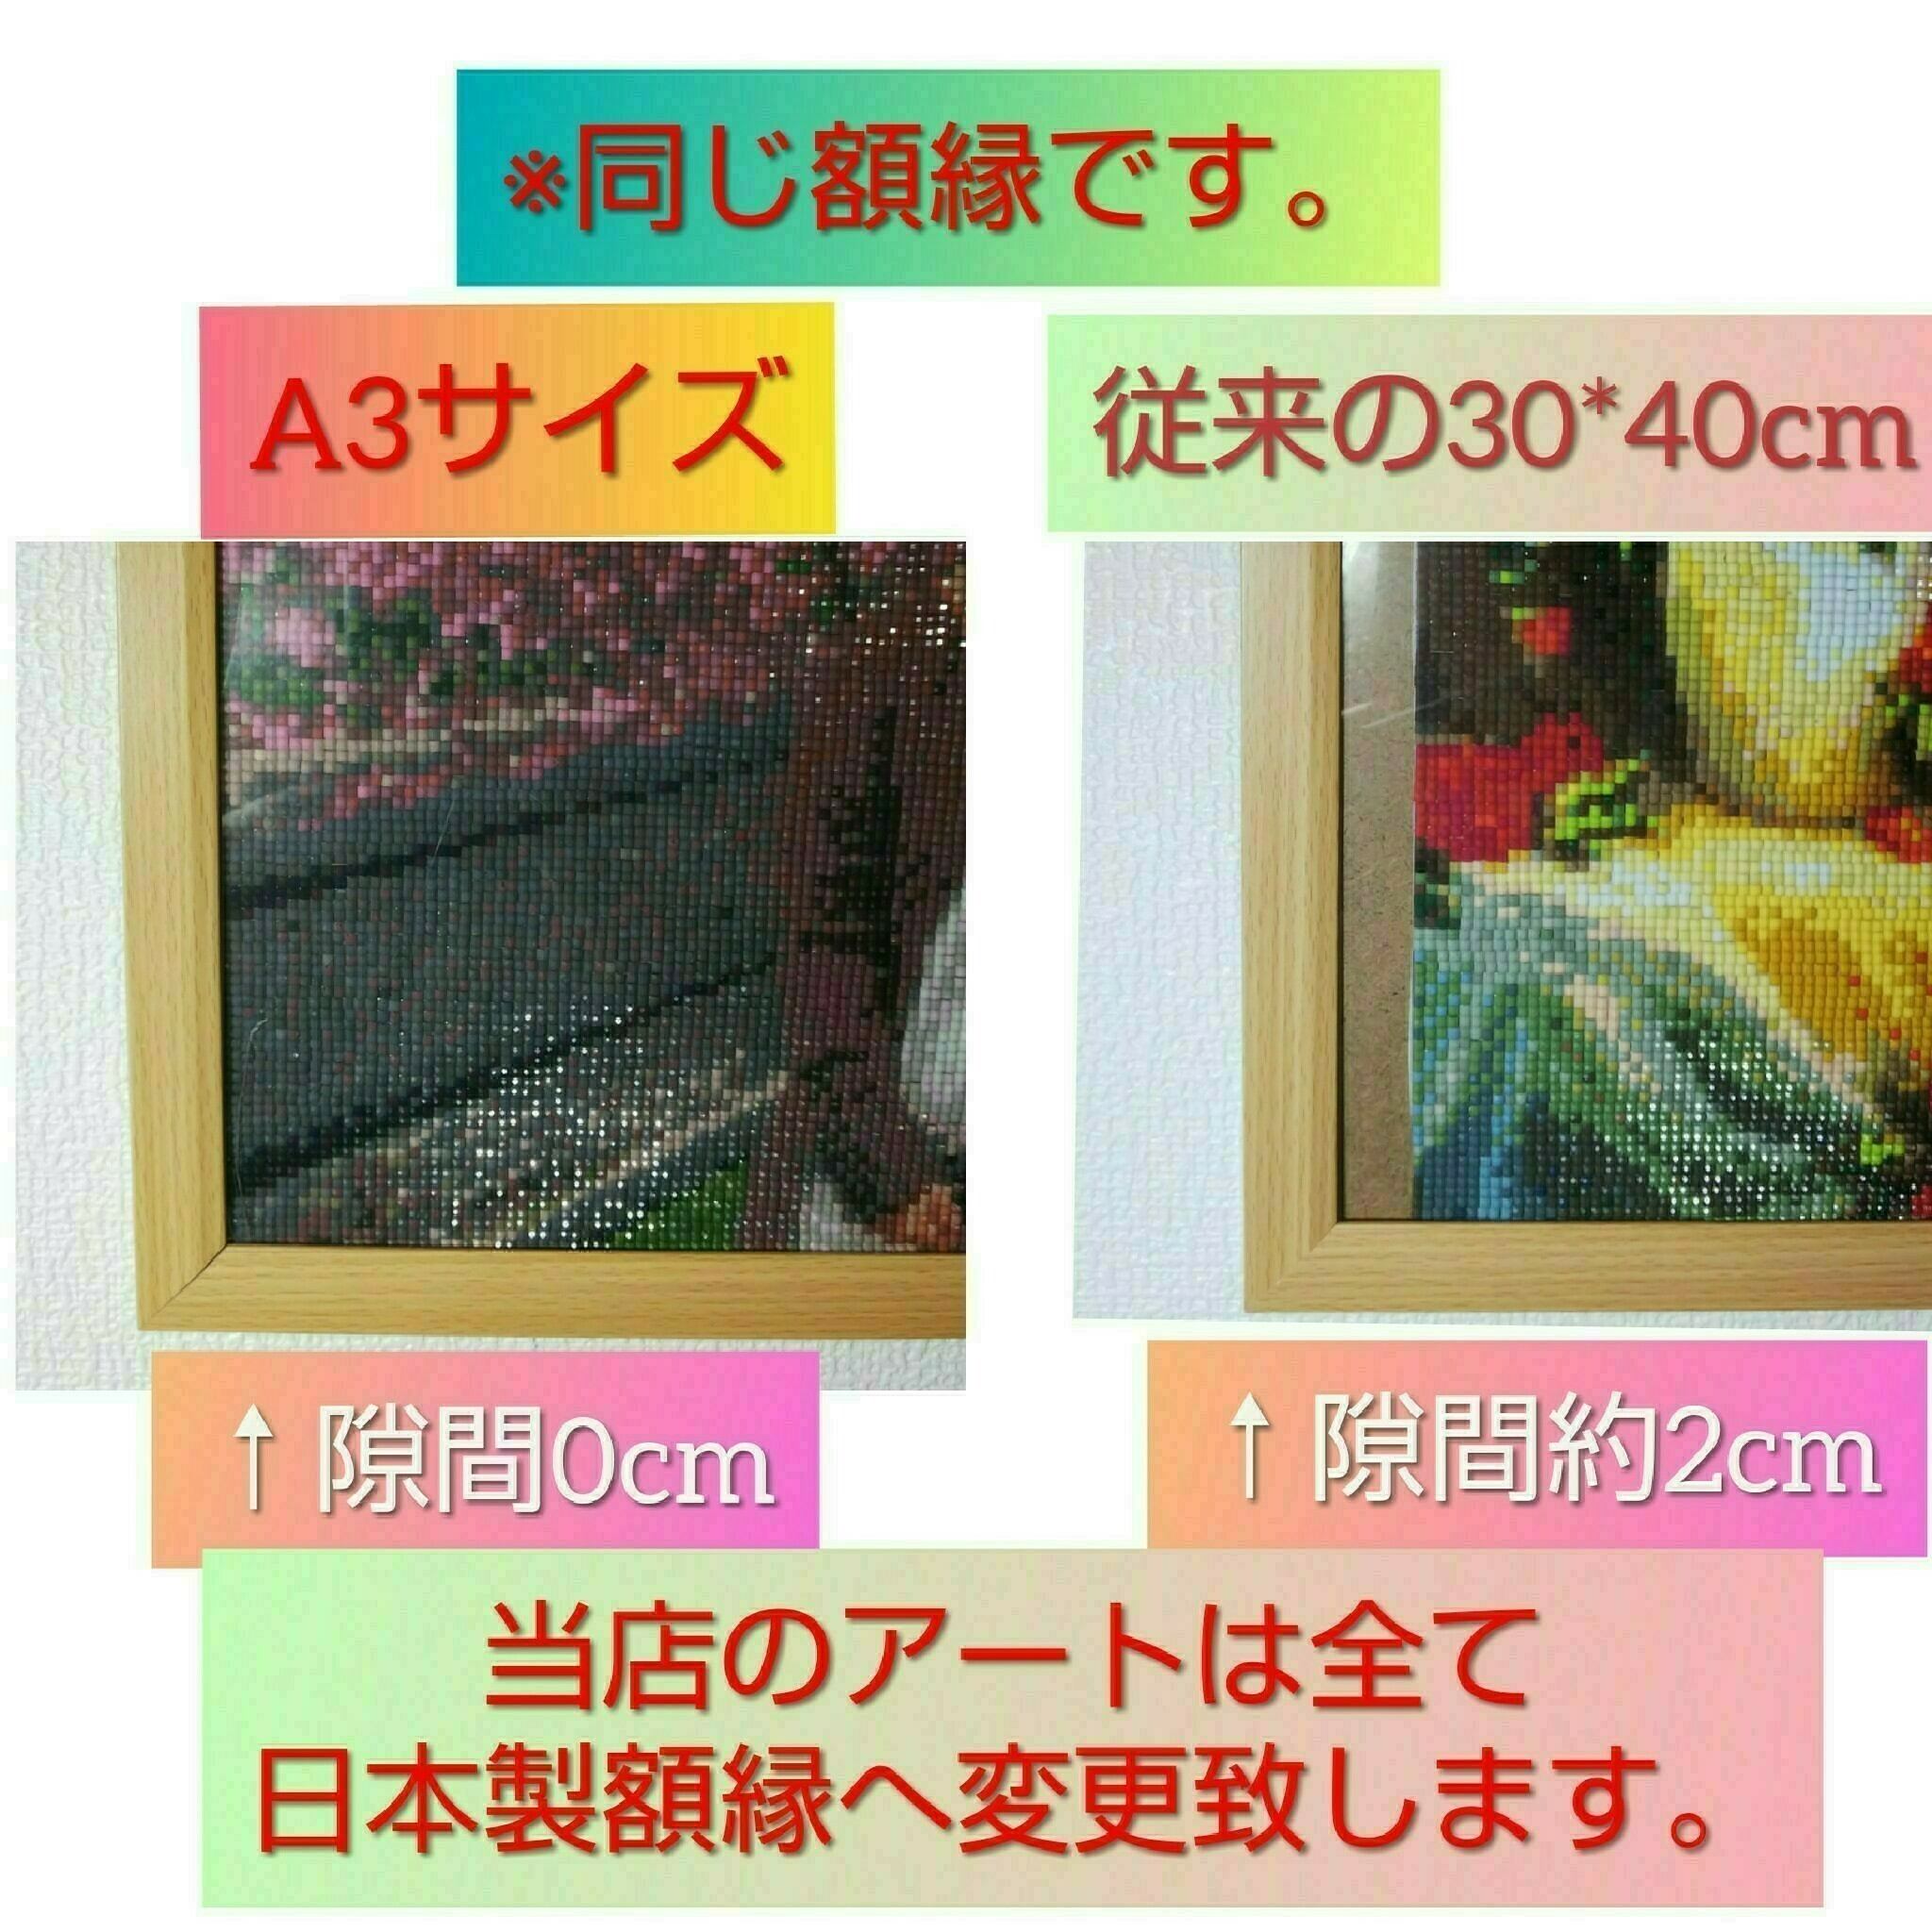 A3サイズ 四角ビーズ【fan-008】フルダイヤモンドアート